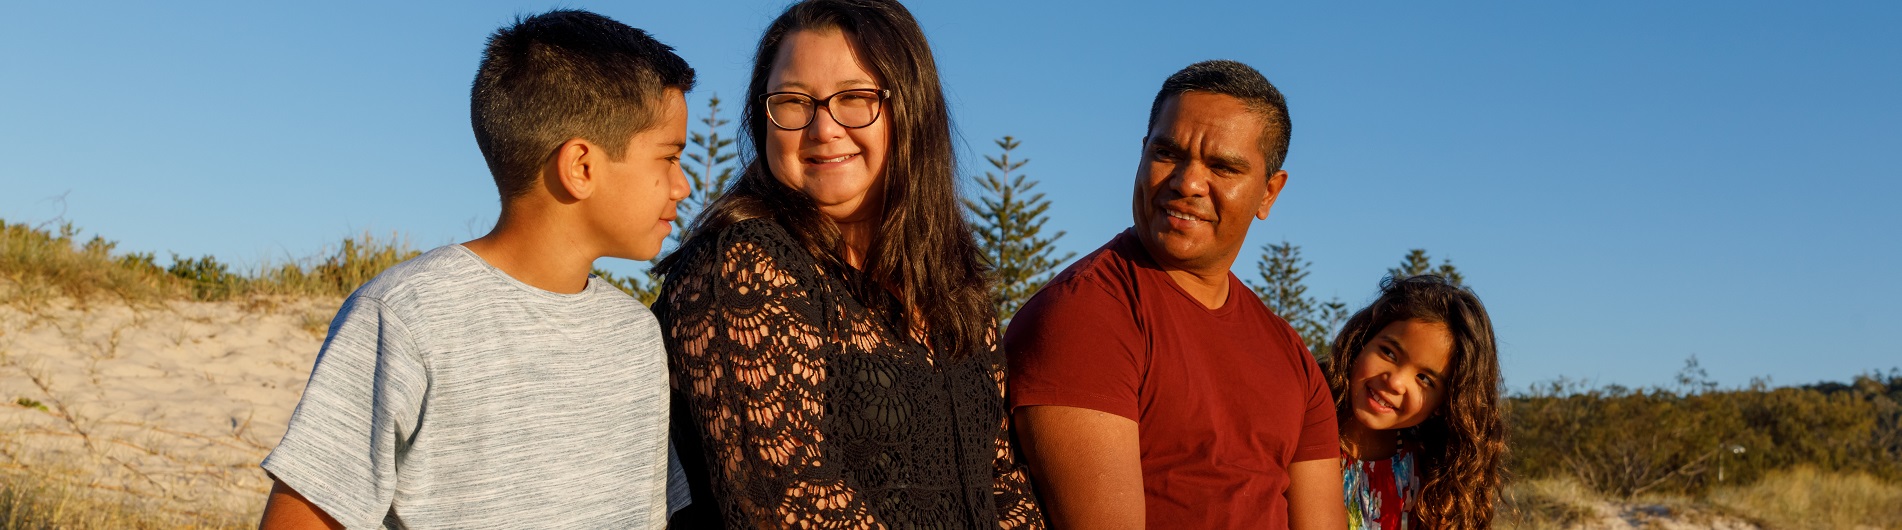 Aboriginal family at the beach